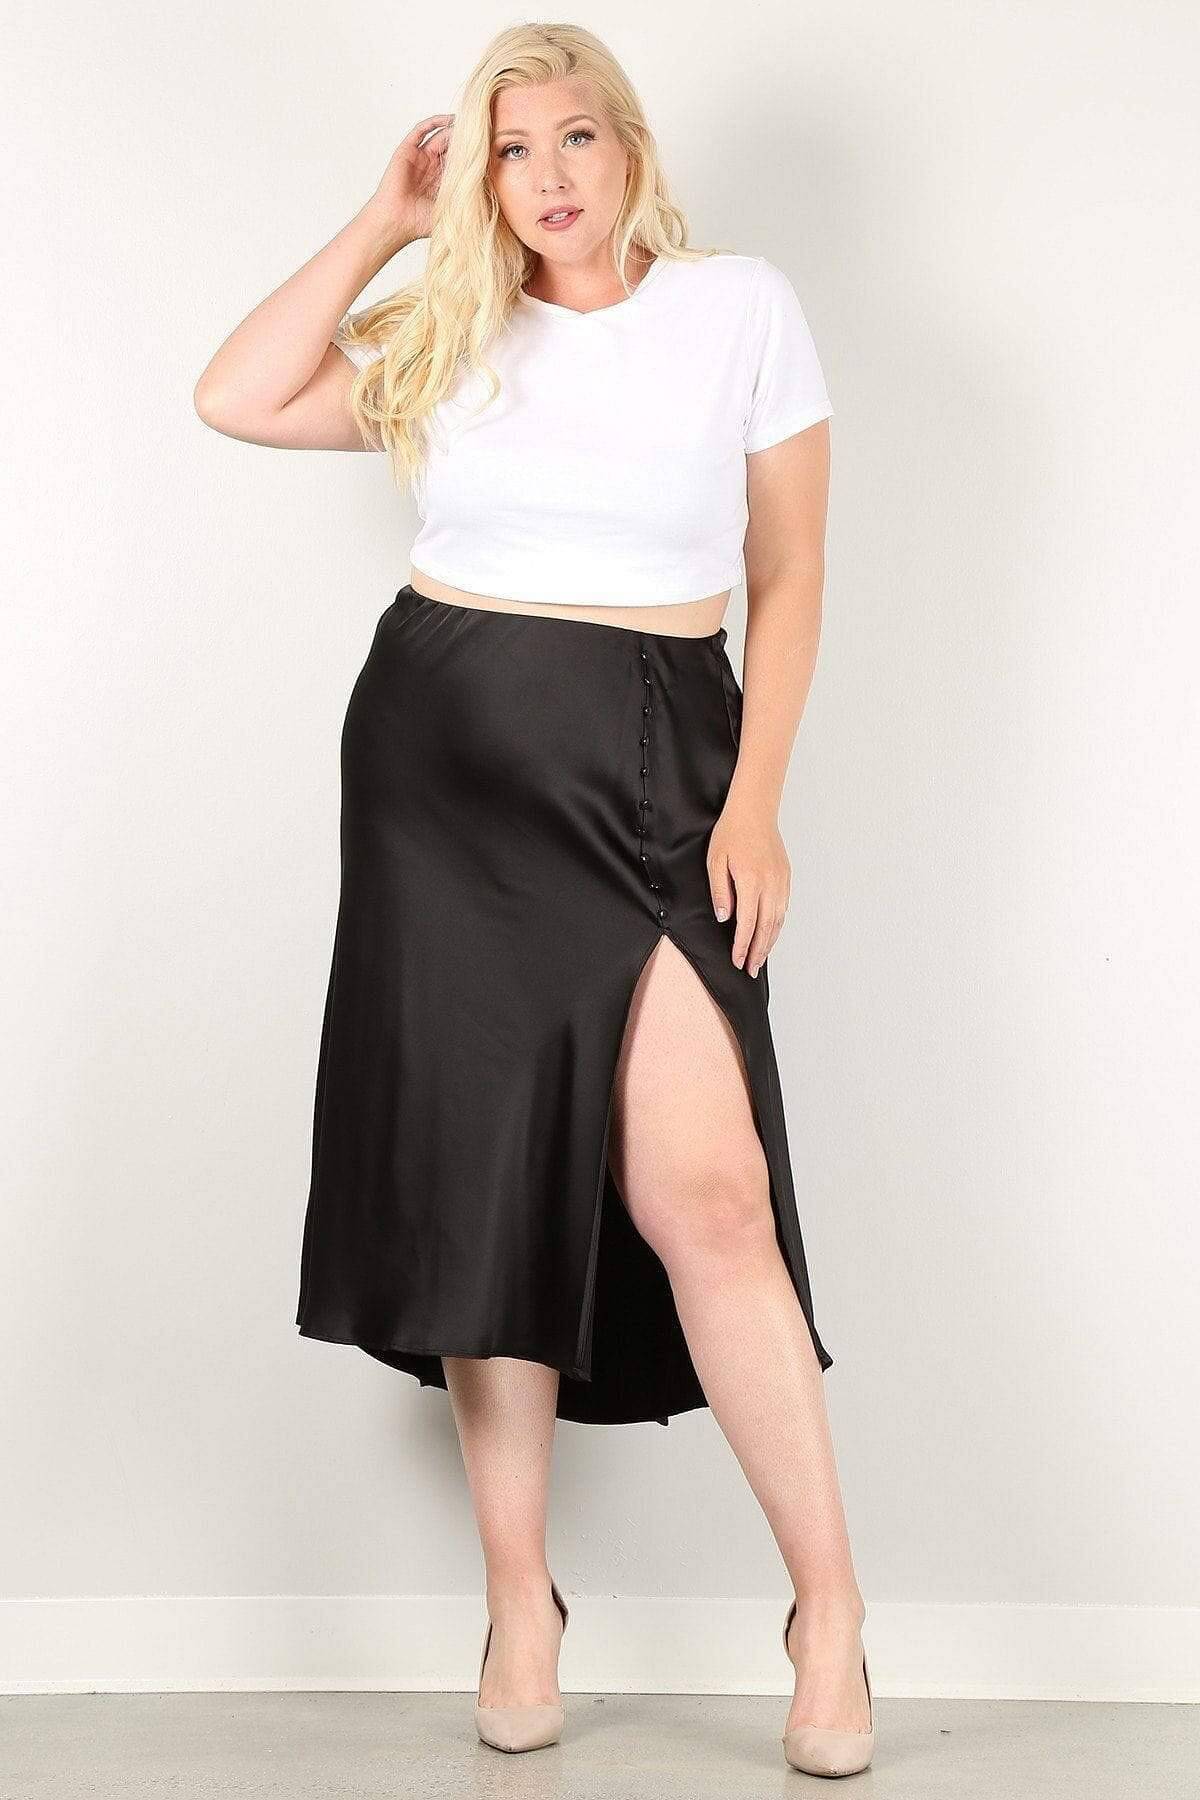 Black Plus Size Midi Skirt - Shopping Therapy, LLC skirt